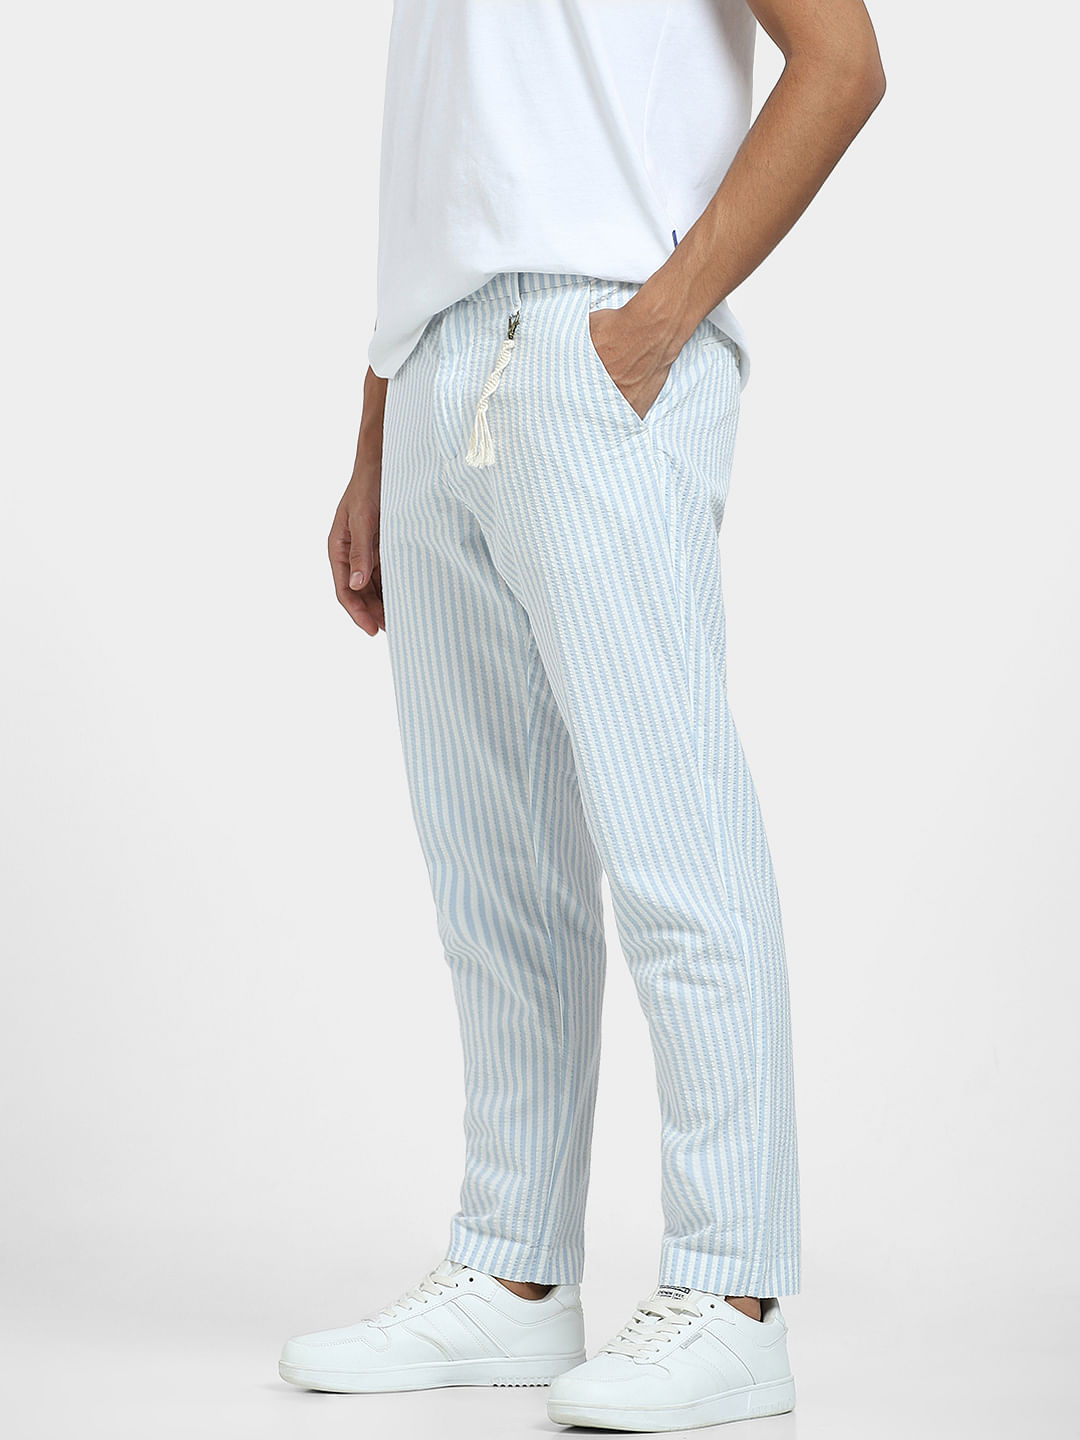 Men's Organic Cotton Pants, Light Blue/White | Lexington